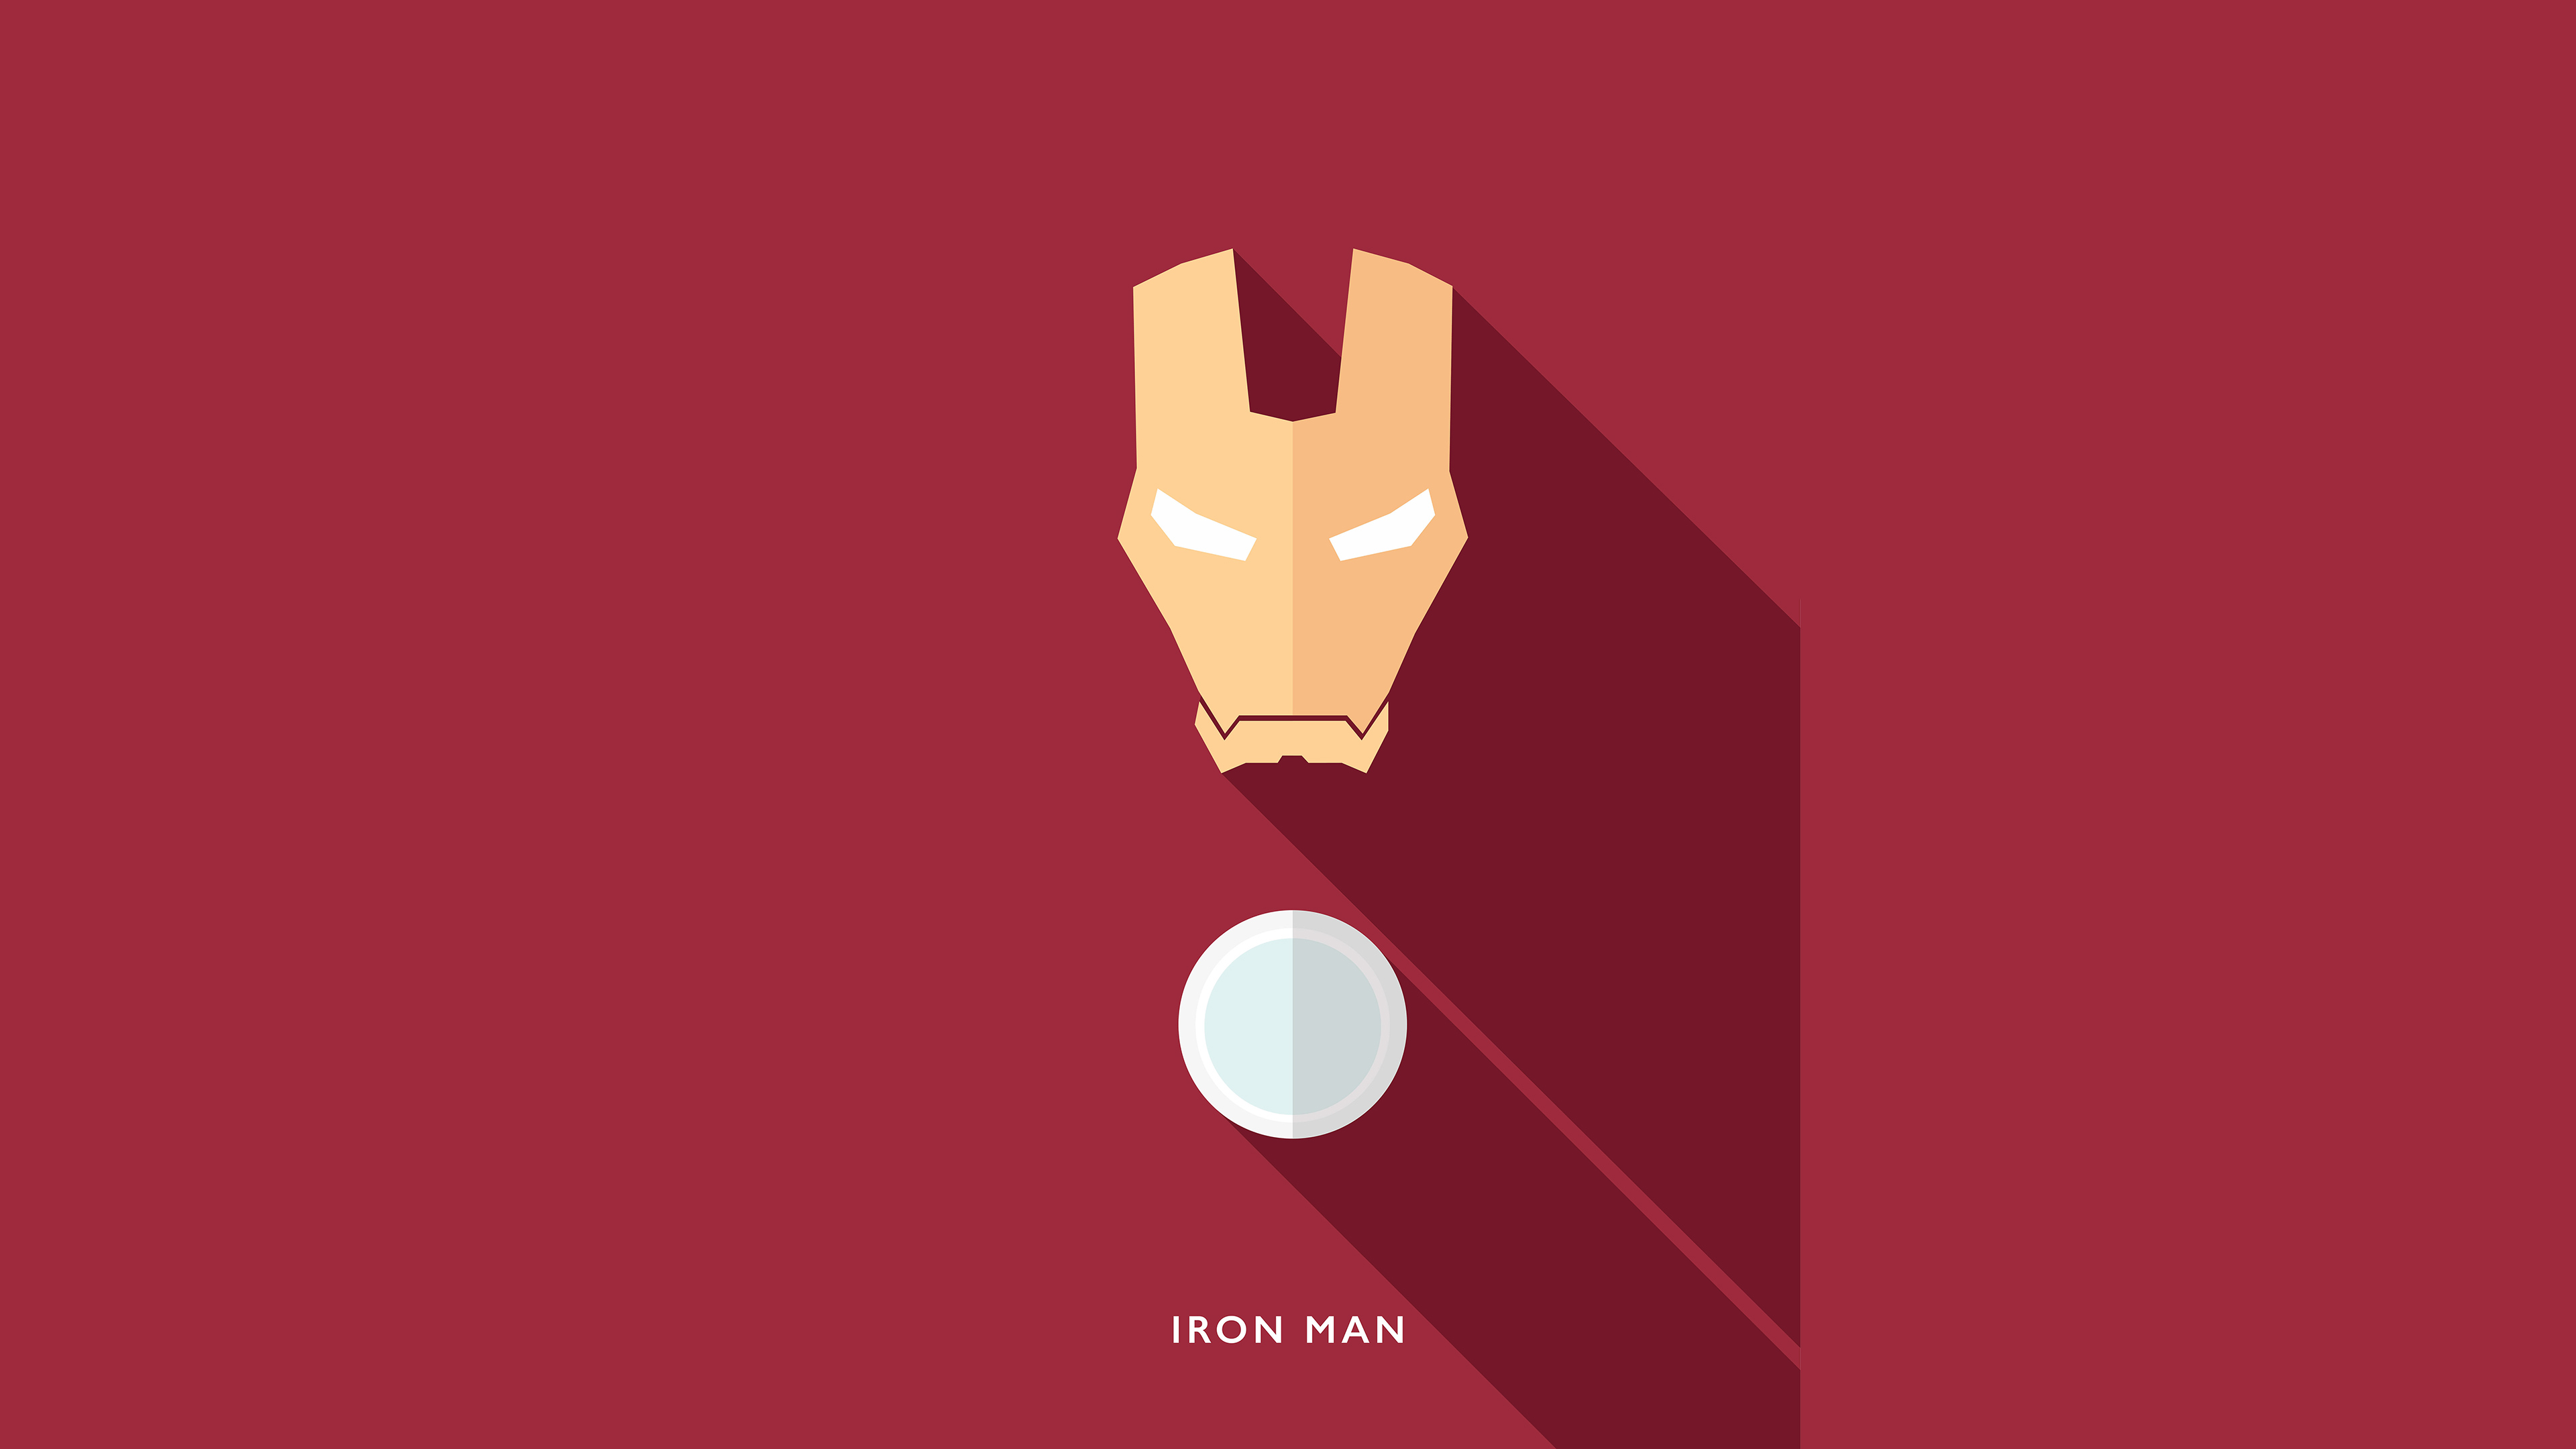 Comics Iron Man 4k Ultra HD Wallpaper by Jarno van der Geest